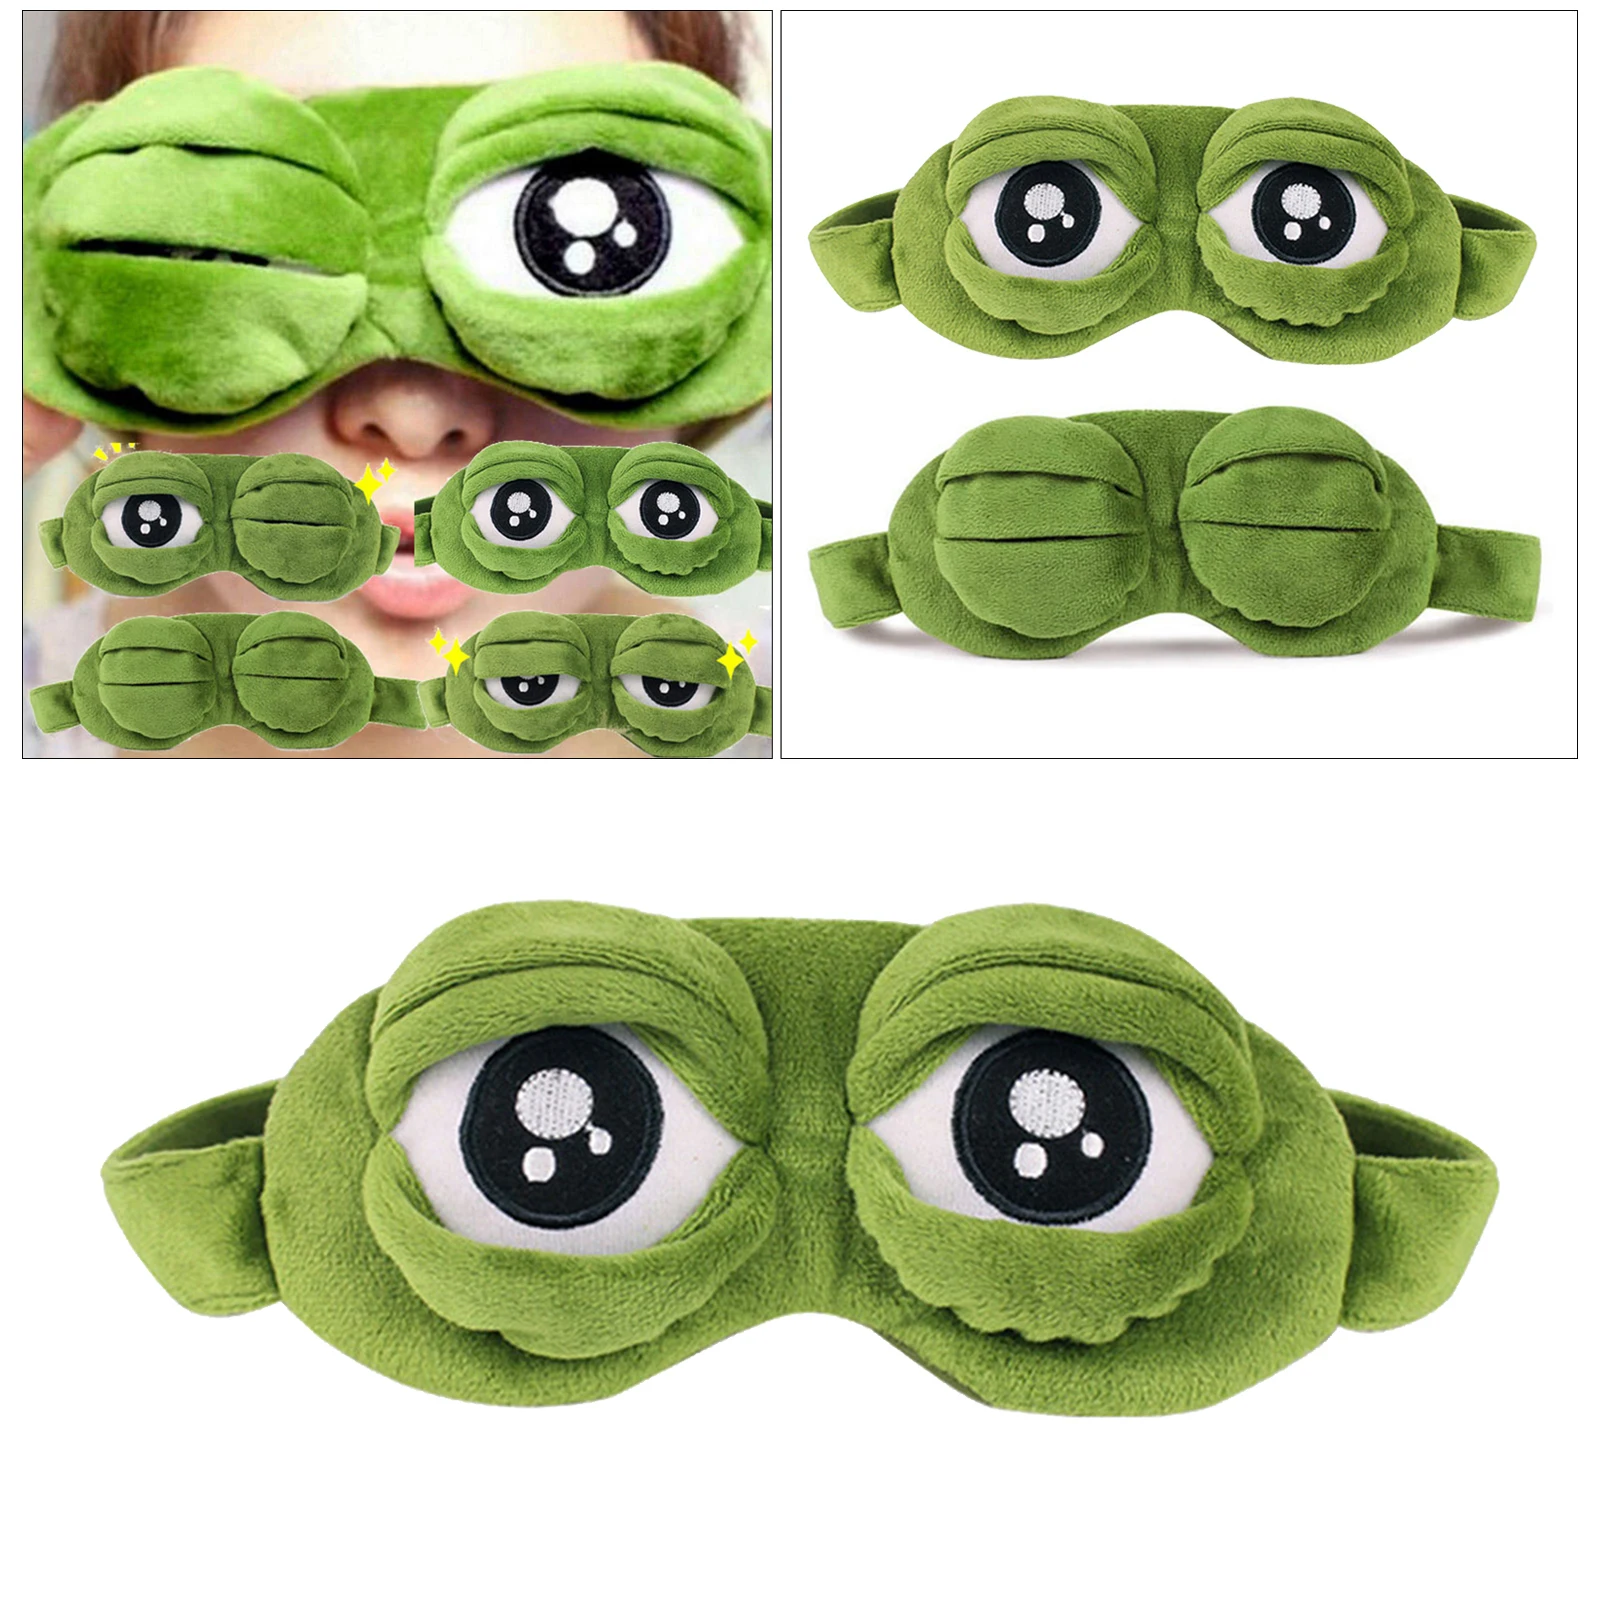 3D Frog Sleeping Masks Eyeshade Plush Eye Cover Travel Cartoon Eyeshade for Eye Travel Relax Sleeping Gift Cute Eyes Cover